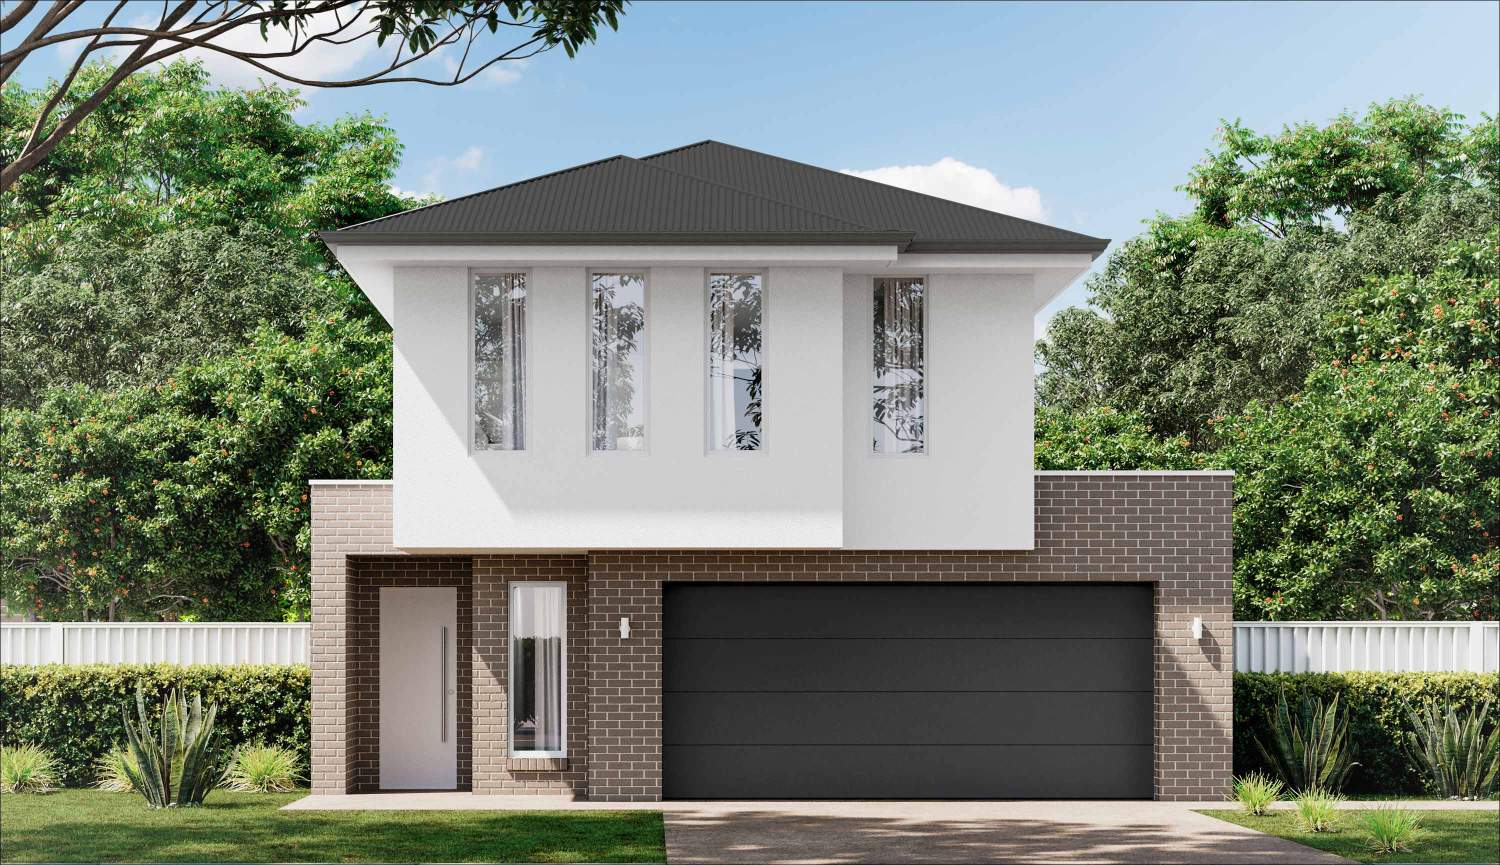 wilmington-two-storey-home-design-classic-facade